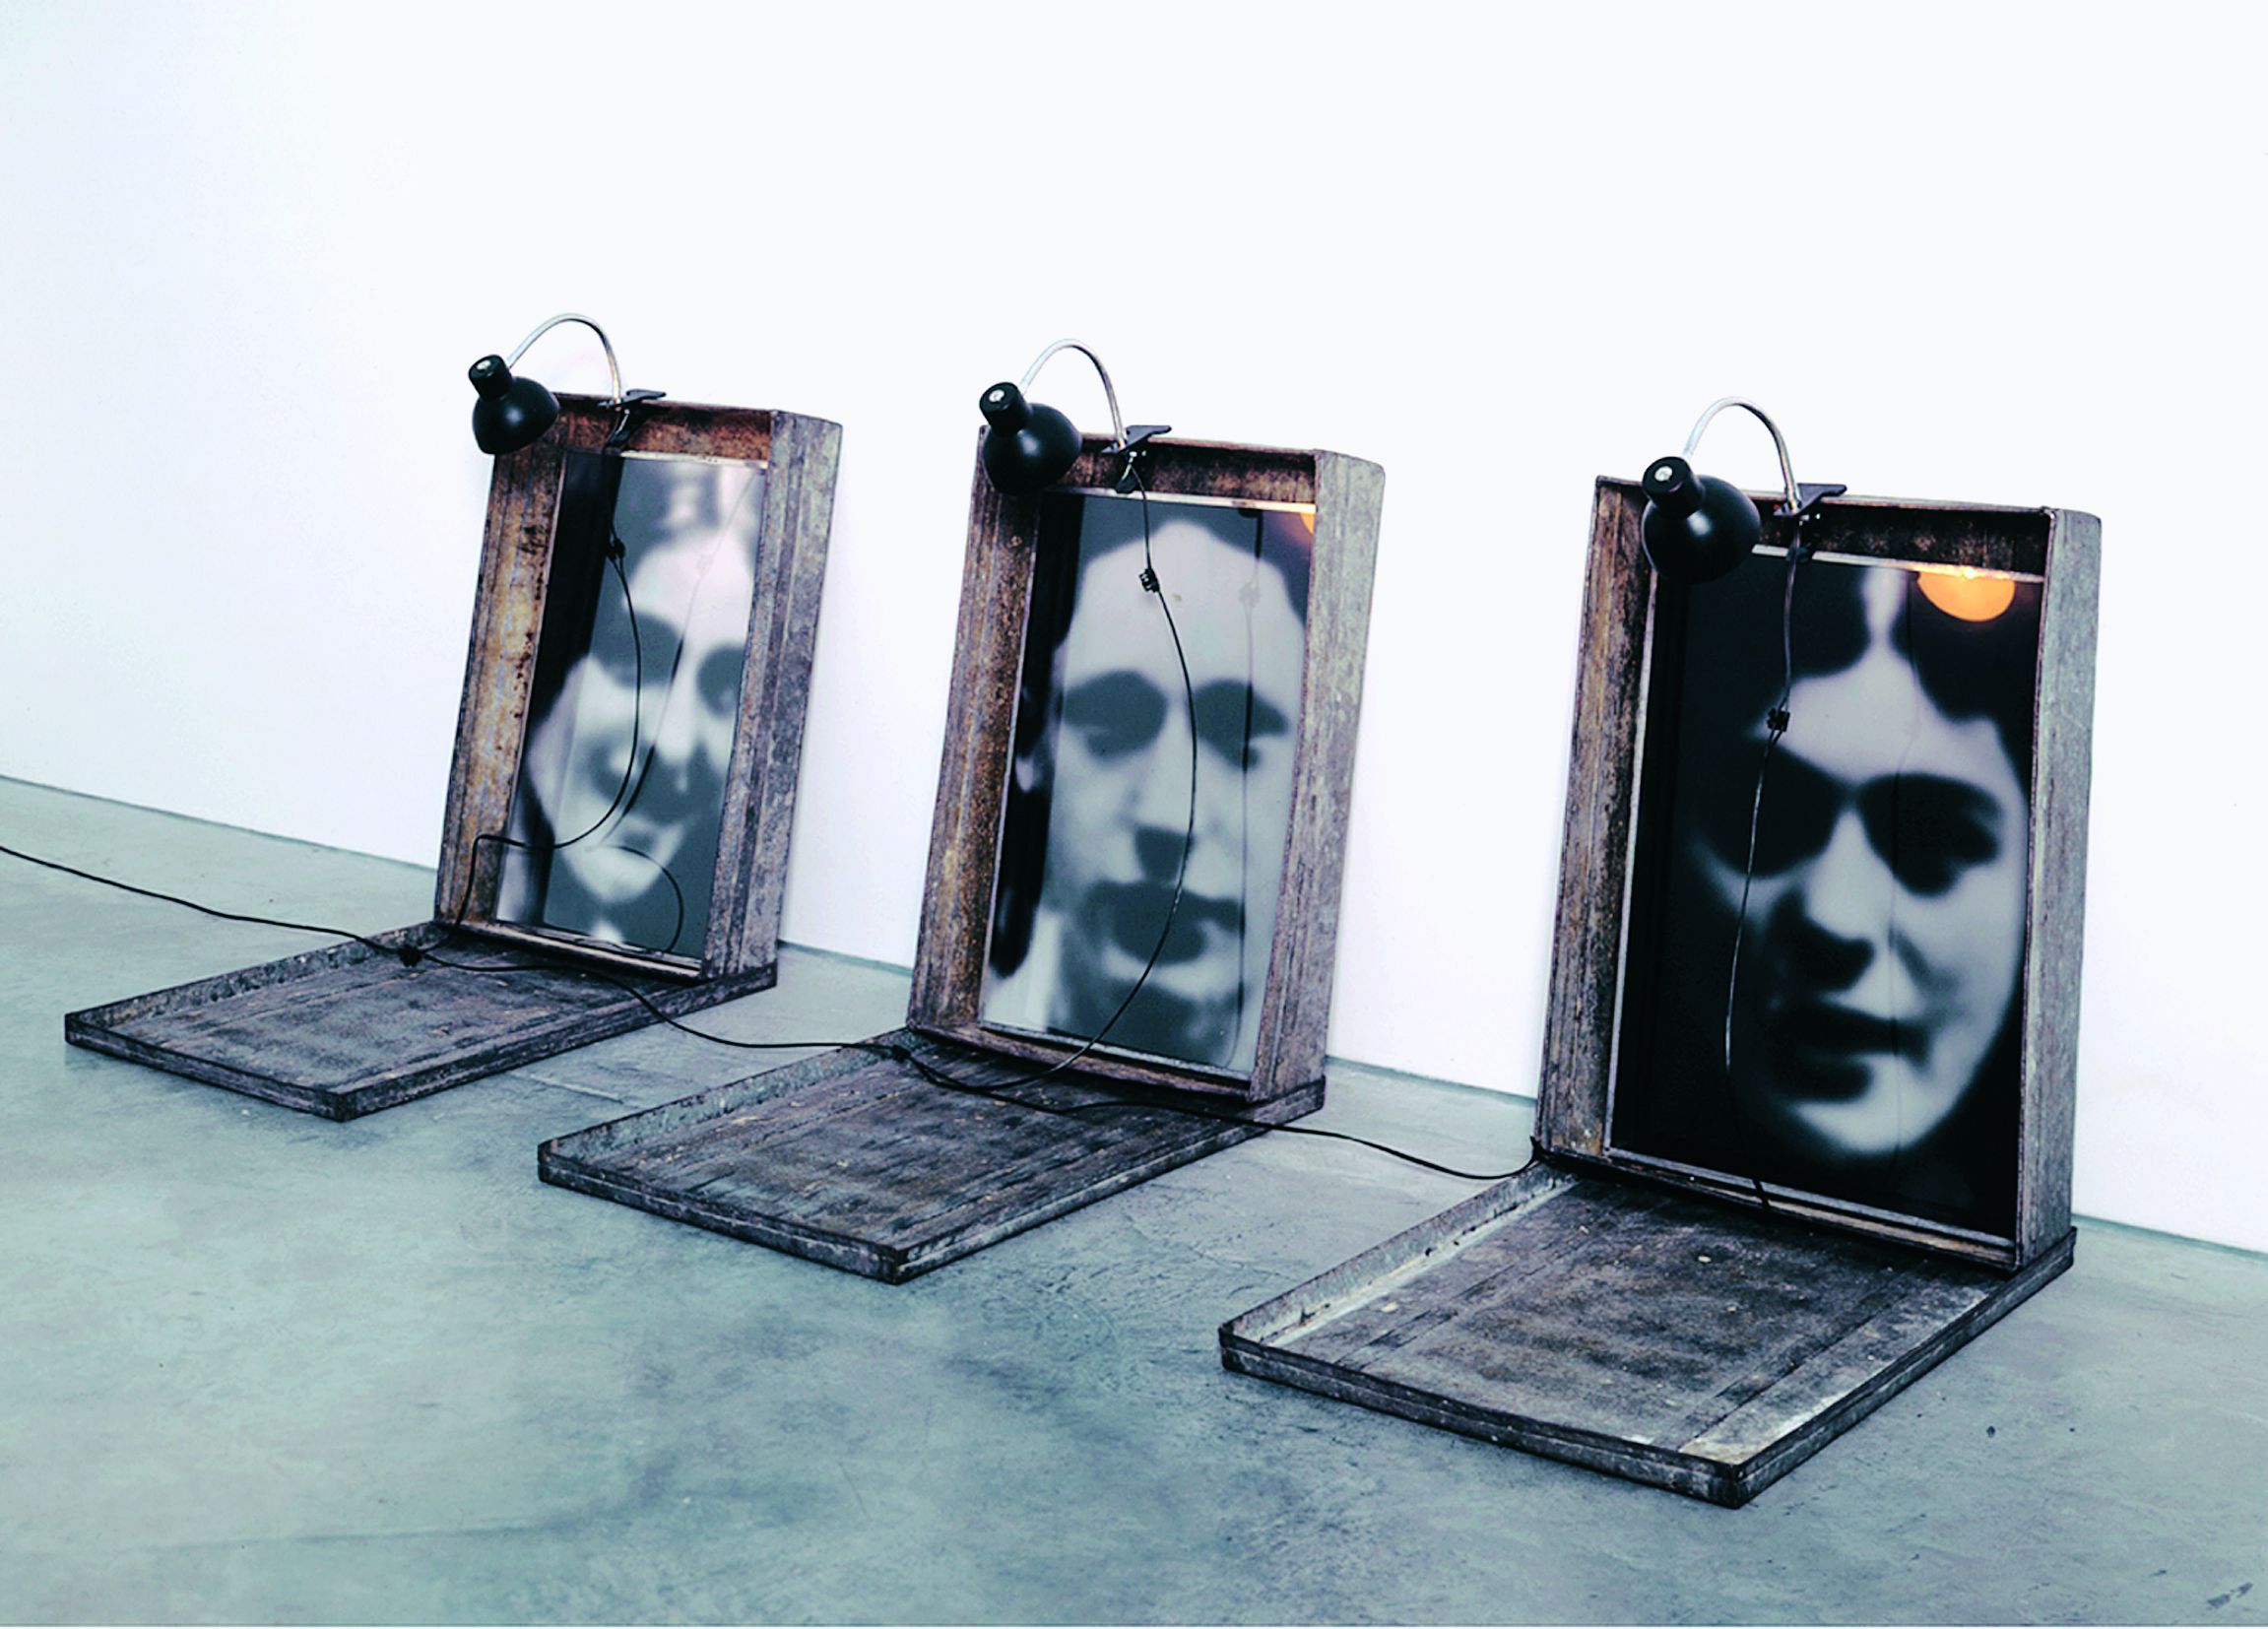 Christian Boltanski
Monuments, 1987
fotografie incorniciate, scatole di metallo, lampadine / framed photos, metal sheet boxes, lightbulbs
dimensioni variabili / dimensions variable 
© C. Boltanski